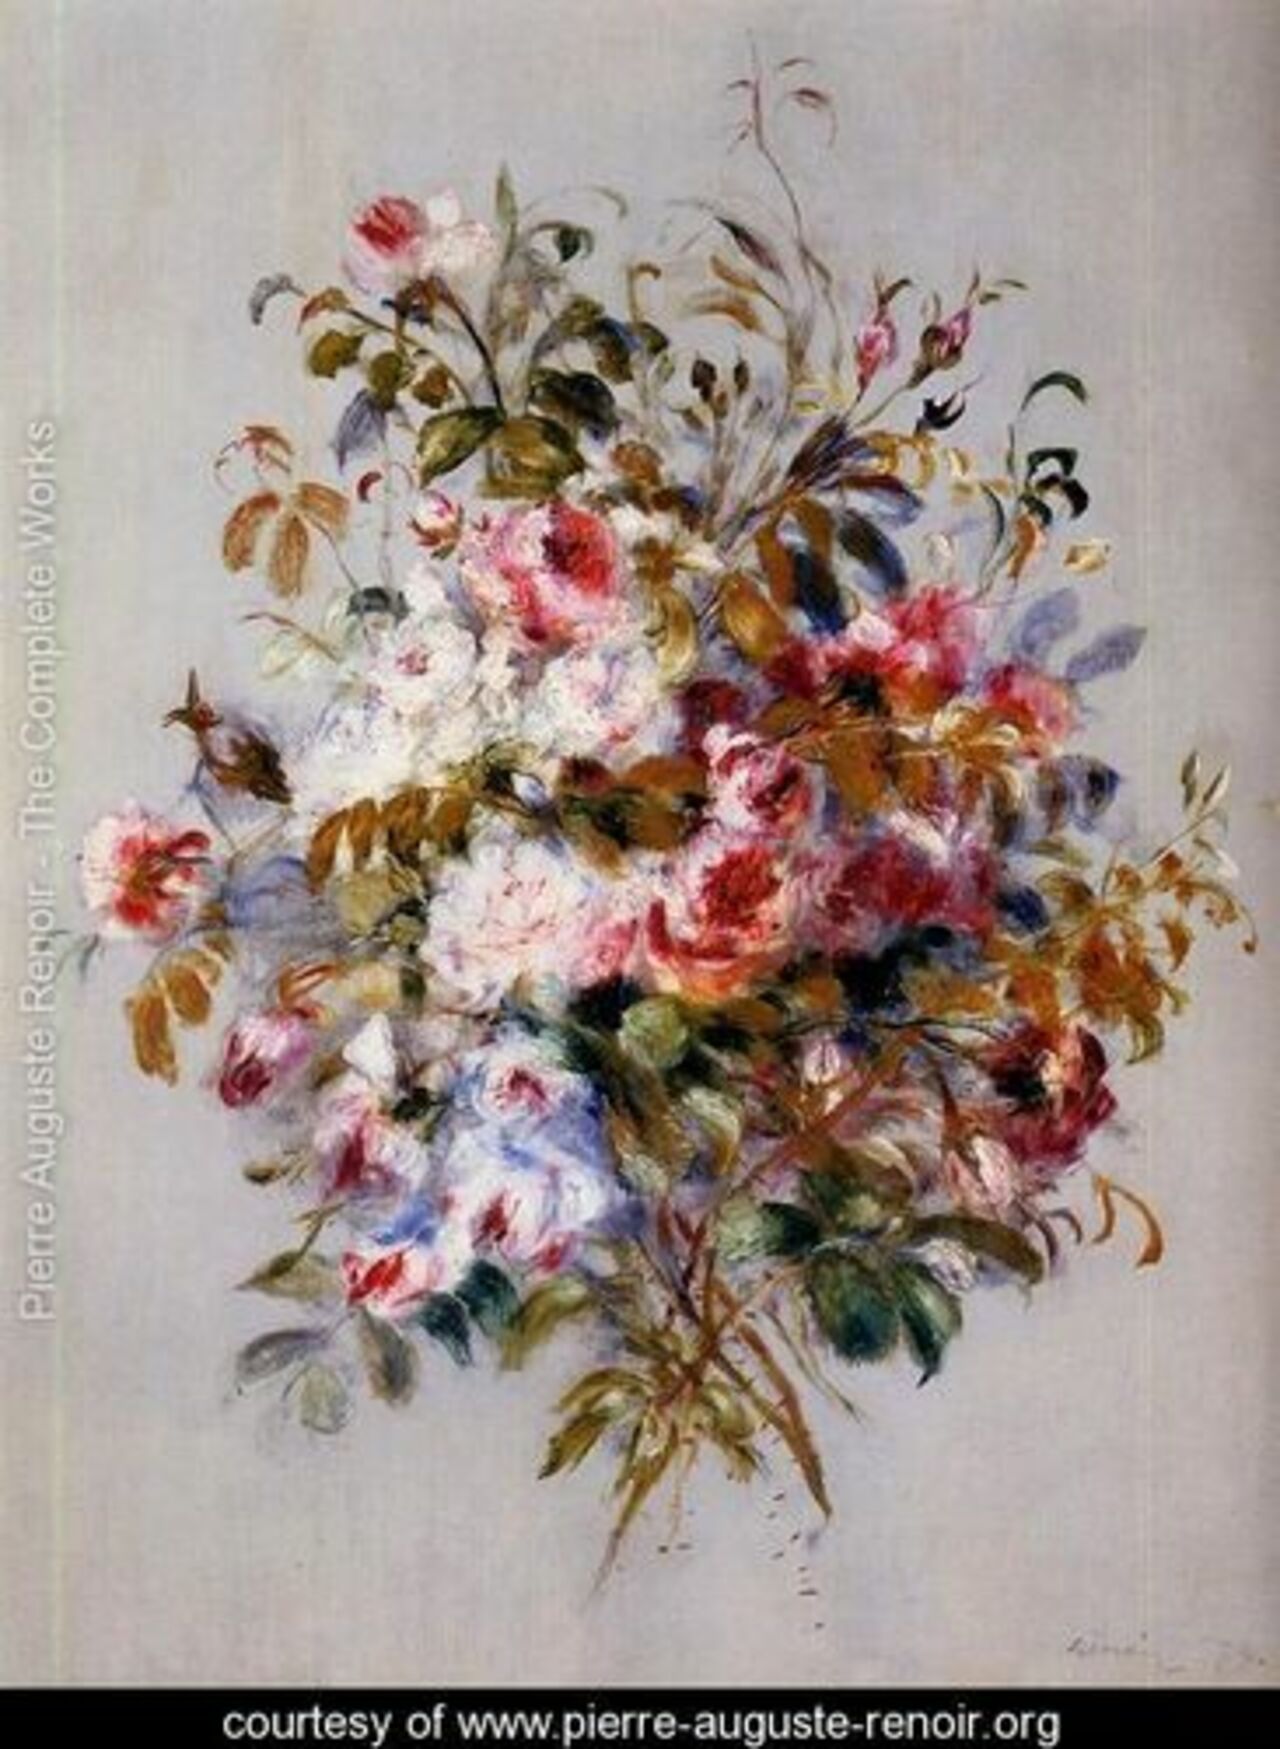 A Bouquet Of Roses by Renoir http://mf.tt/3bi5S @CheekyVimto13 @GoogleExpertUK #art http://t.co/cGUXpLOhUV